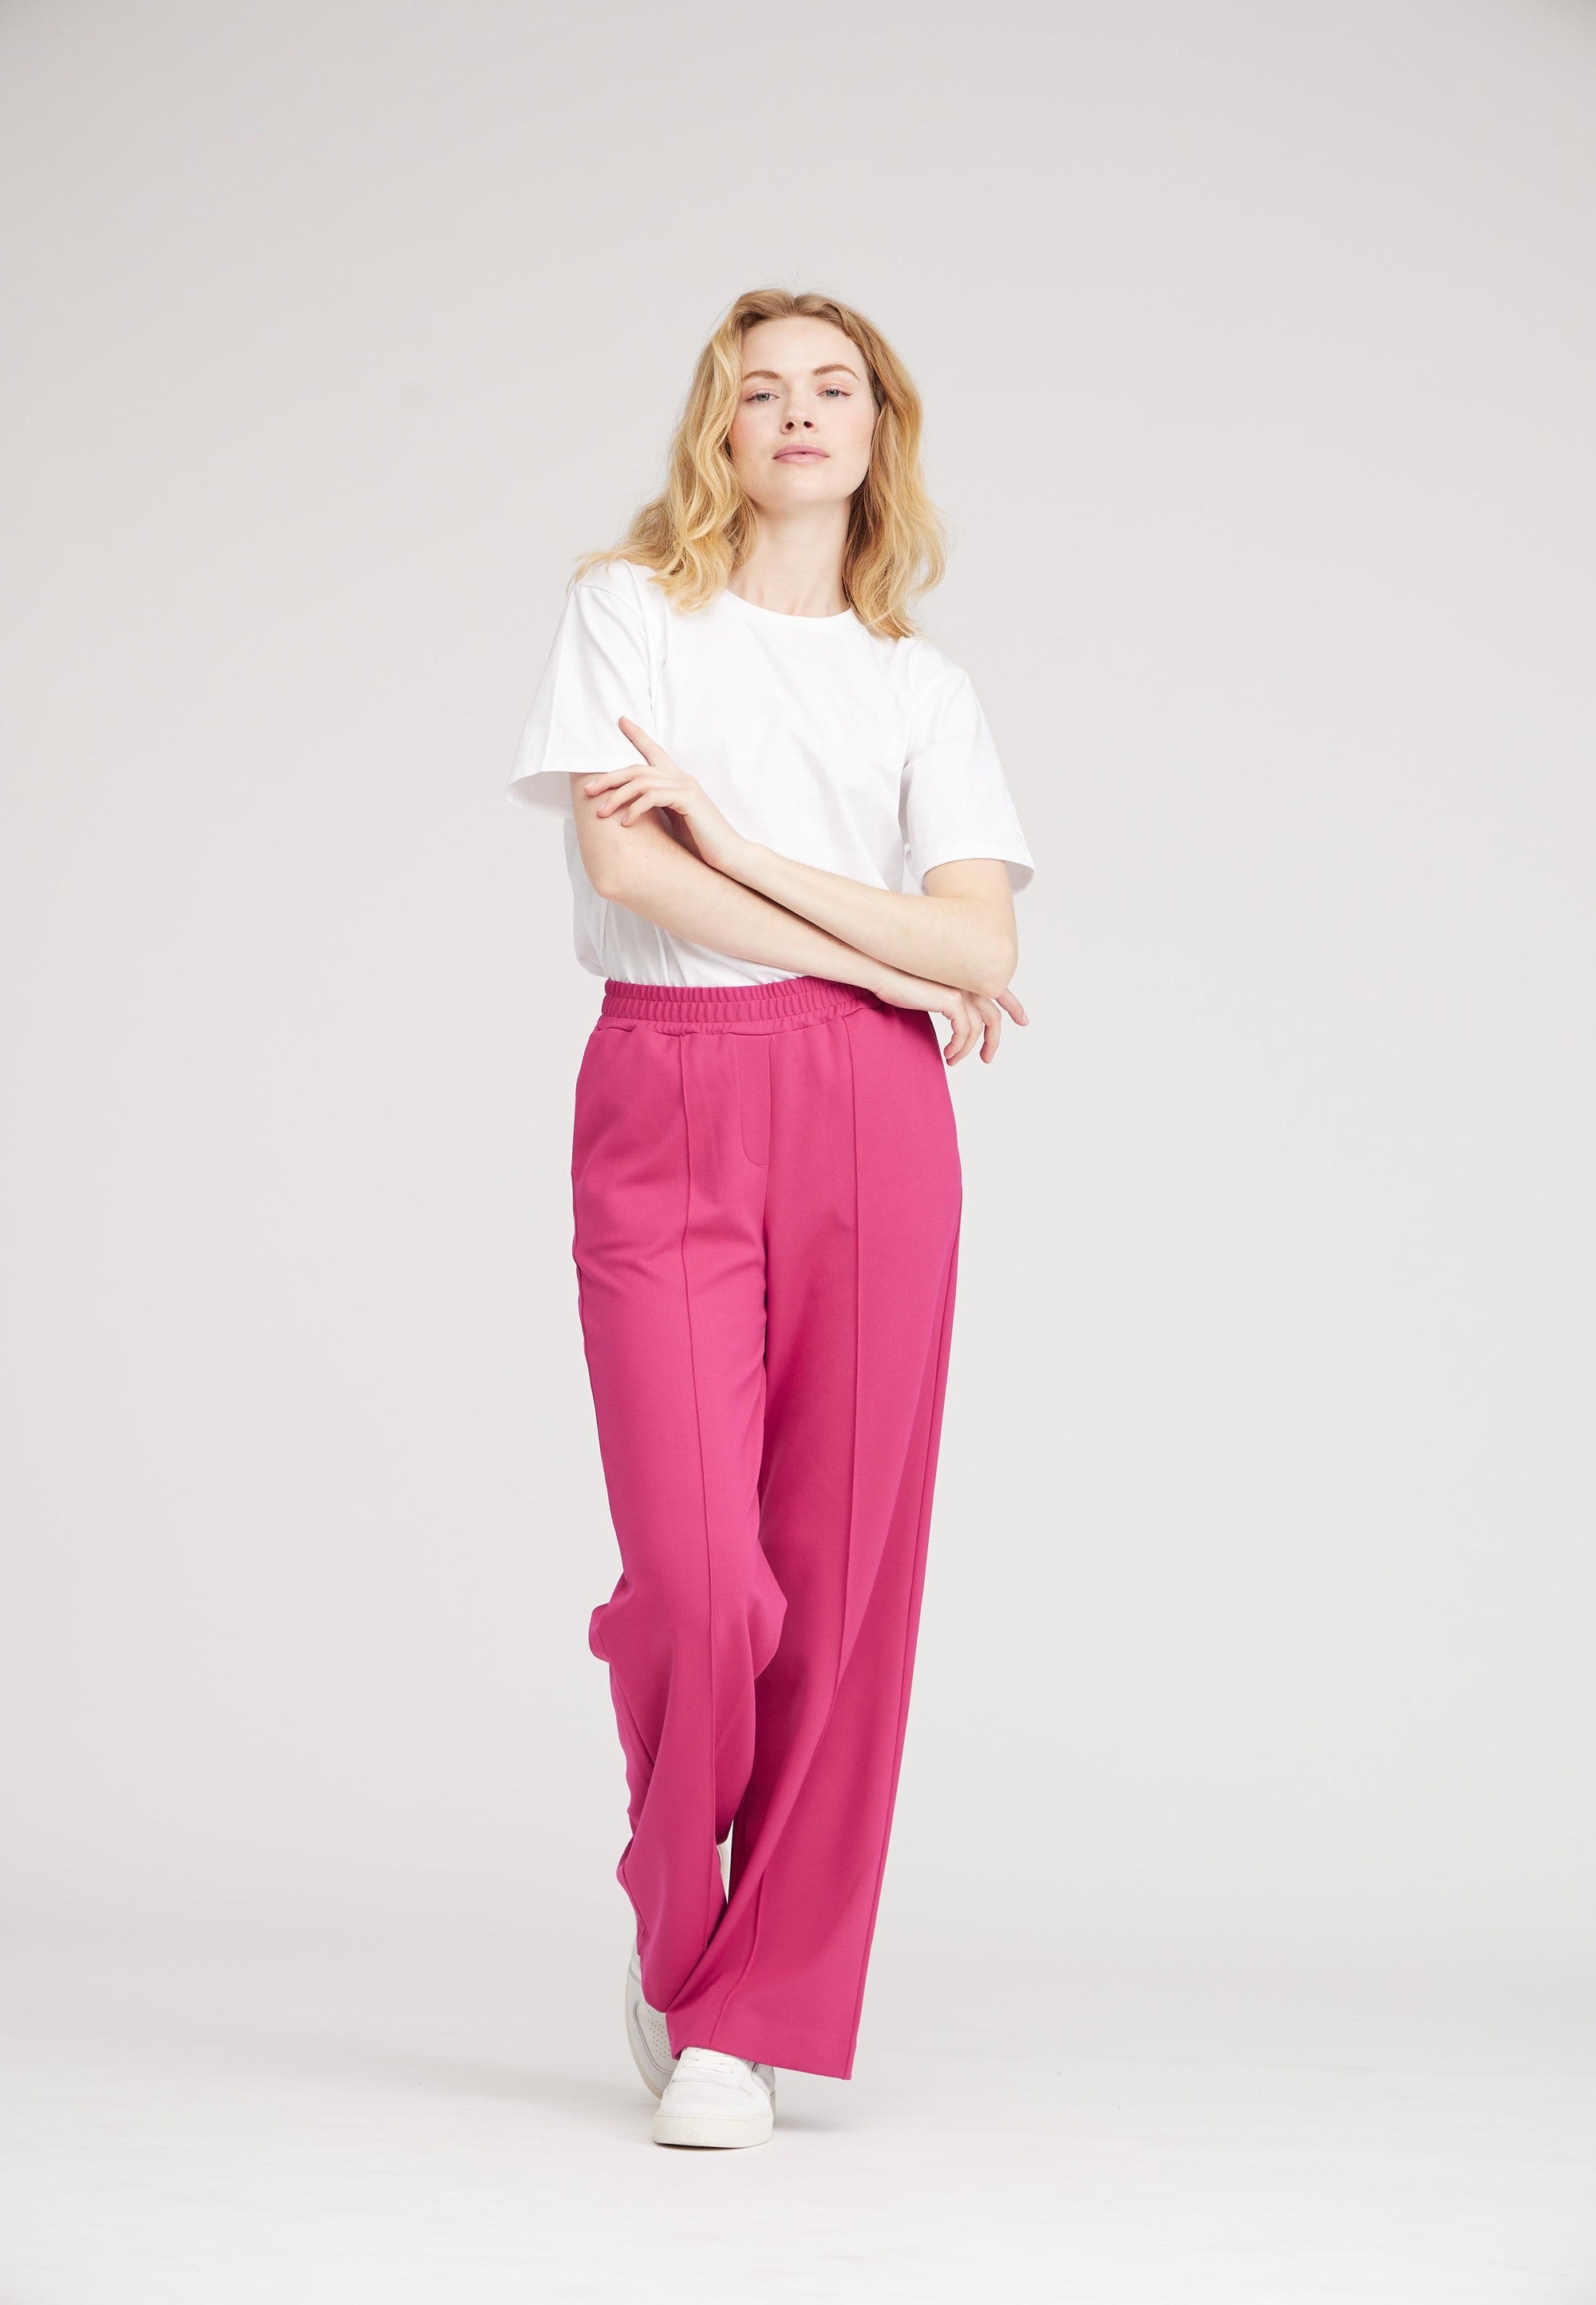 LAURIE Daisy Straight - Medium Length Trousers STRAIGHT 31100 Ruby